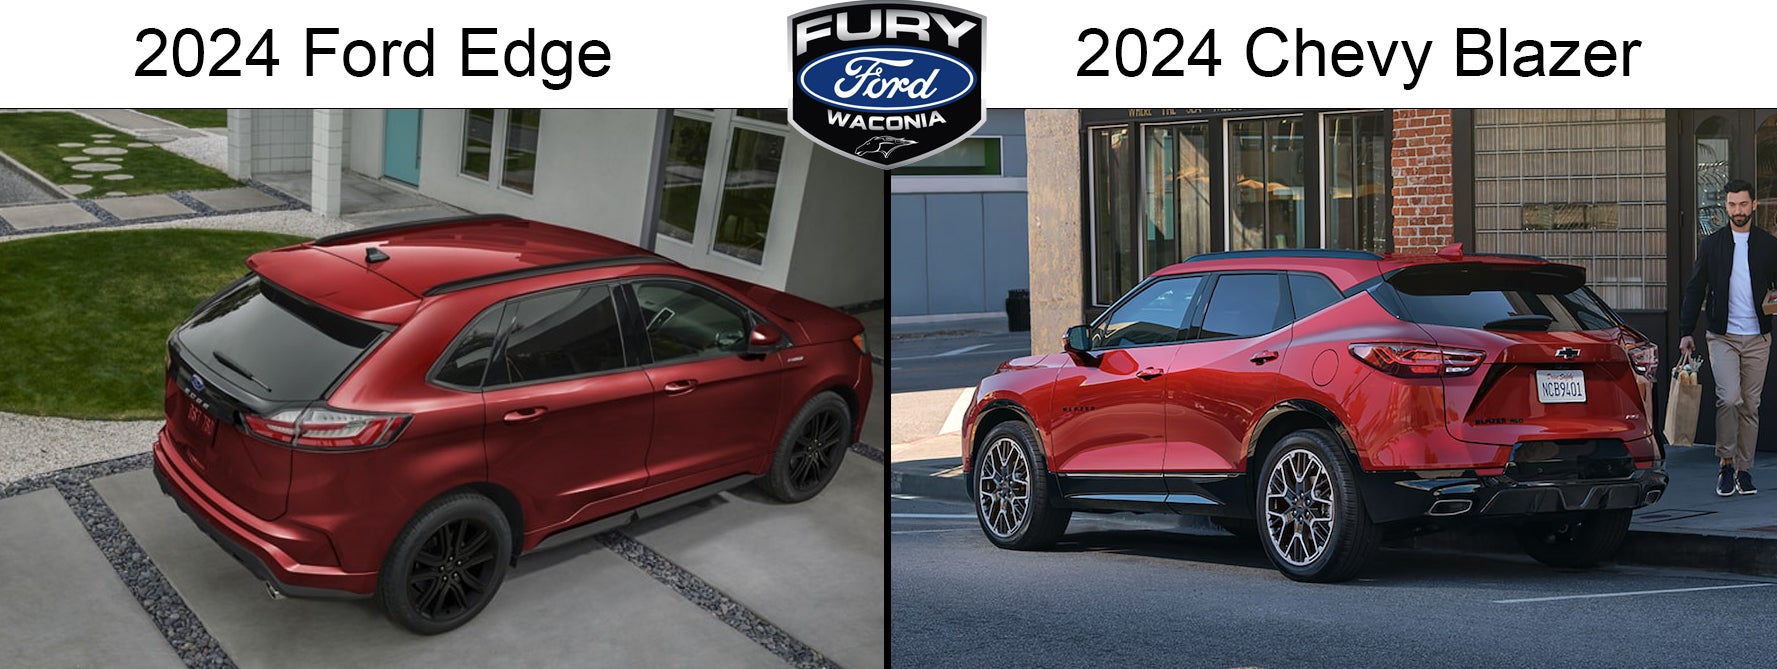 2024 ford edge vs the 2024 chevrolet blazer